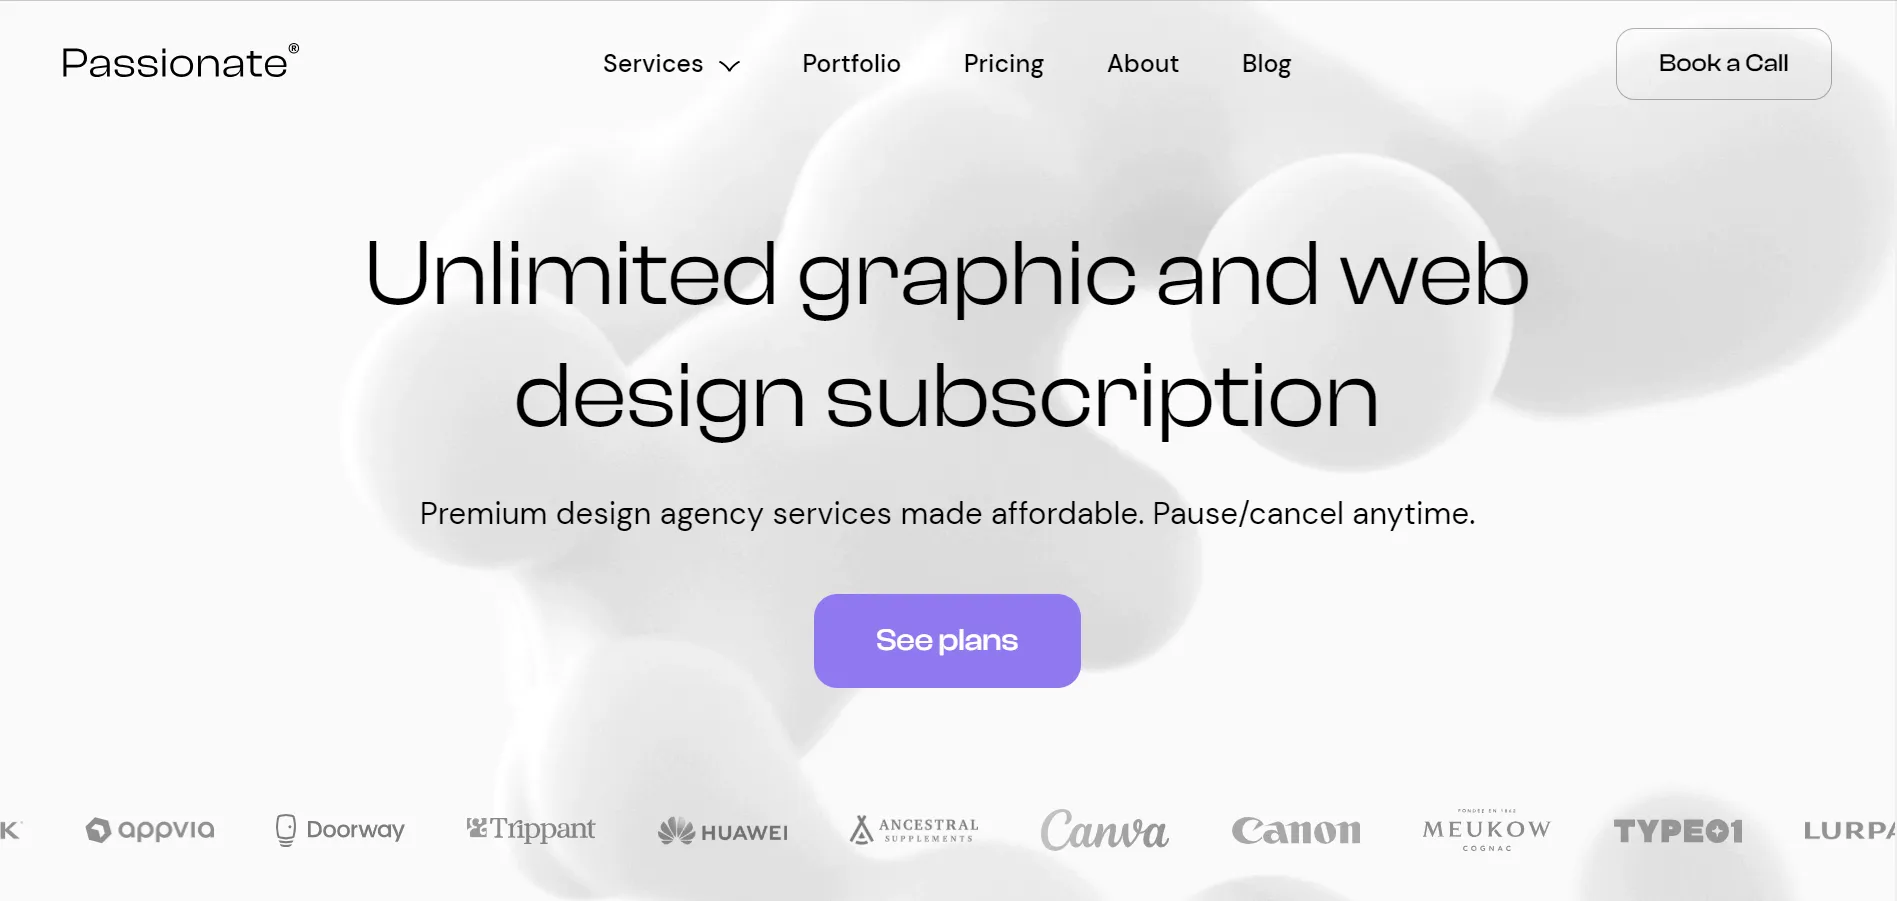 Passionate Design Agency’s website